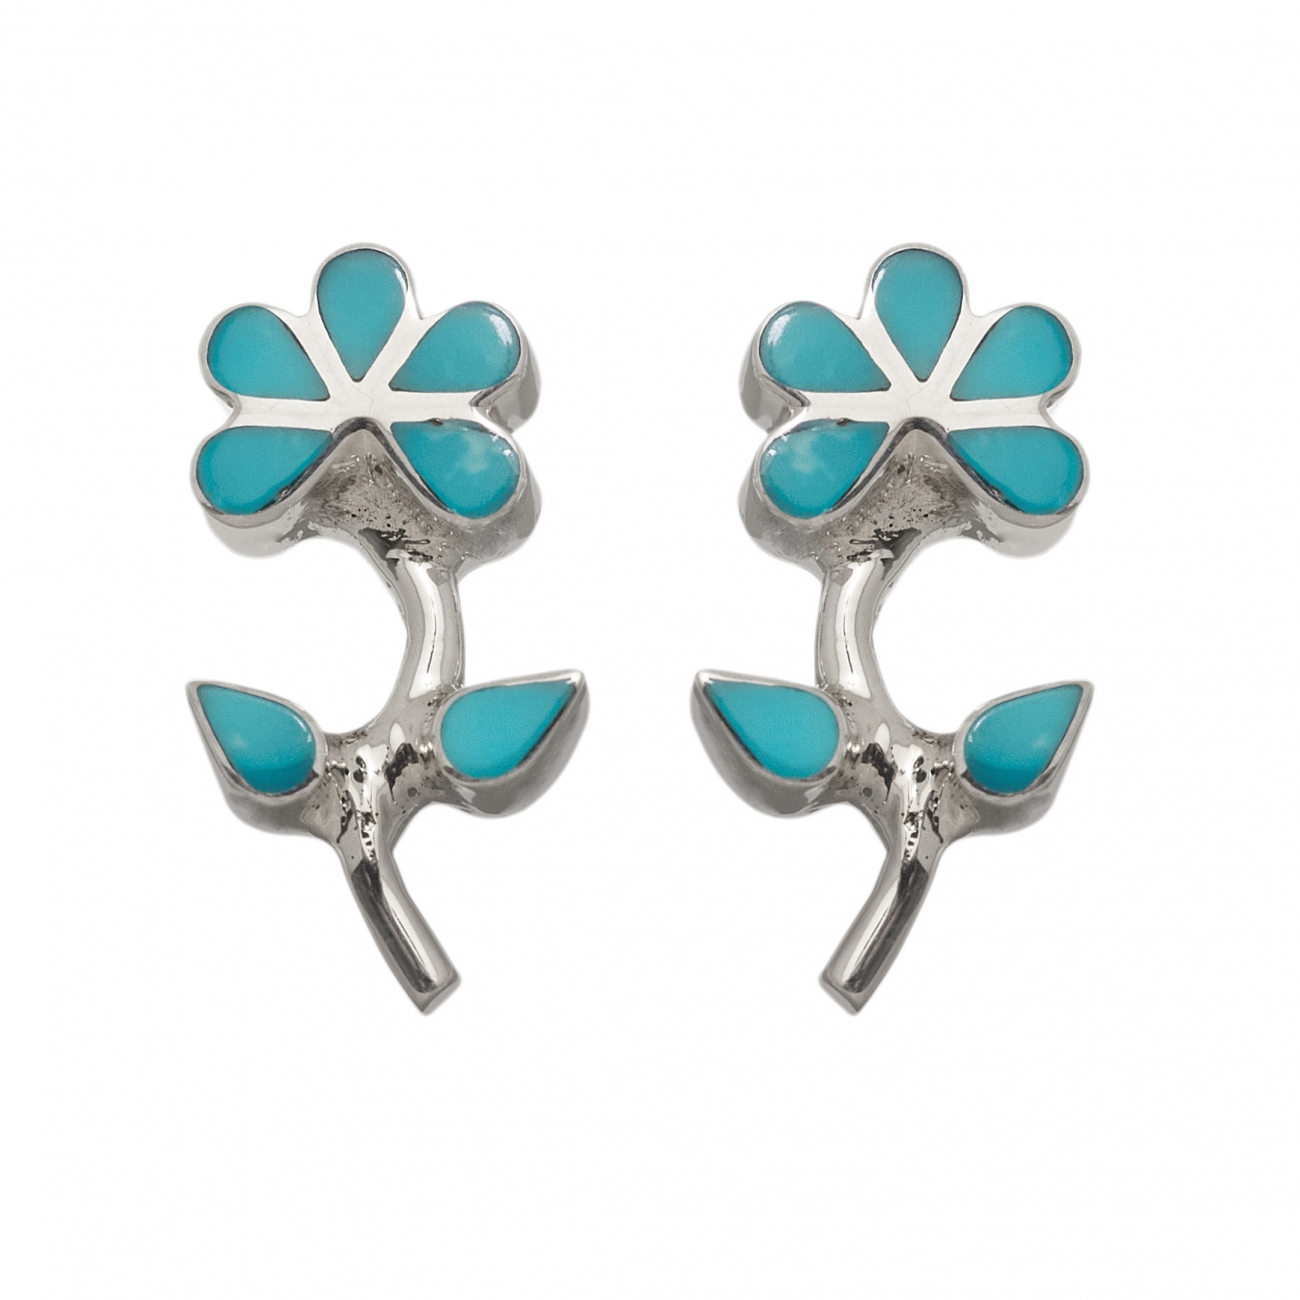 Stud earrings BO337, flowers in turquoise and silver - Harpo Paris